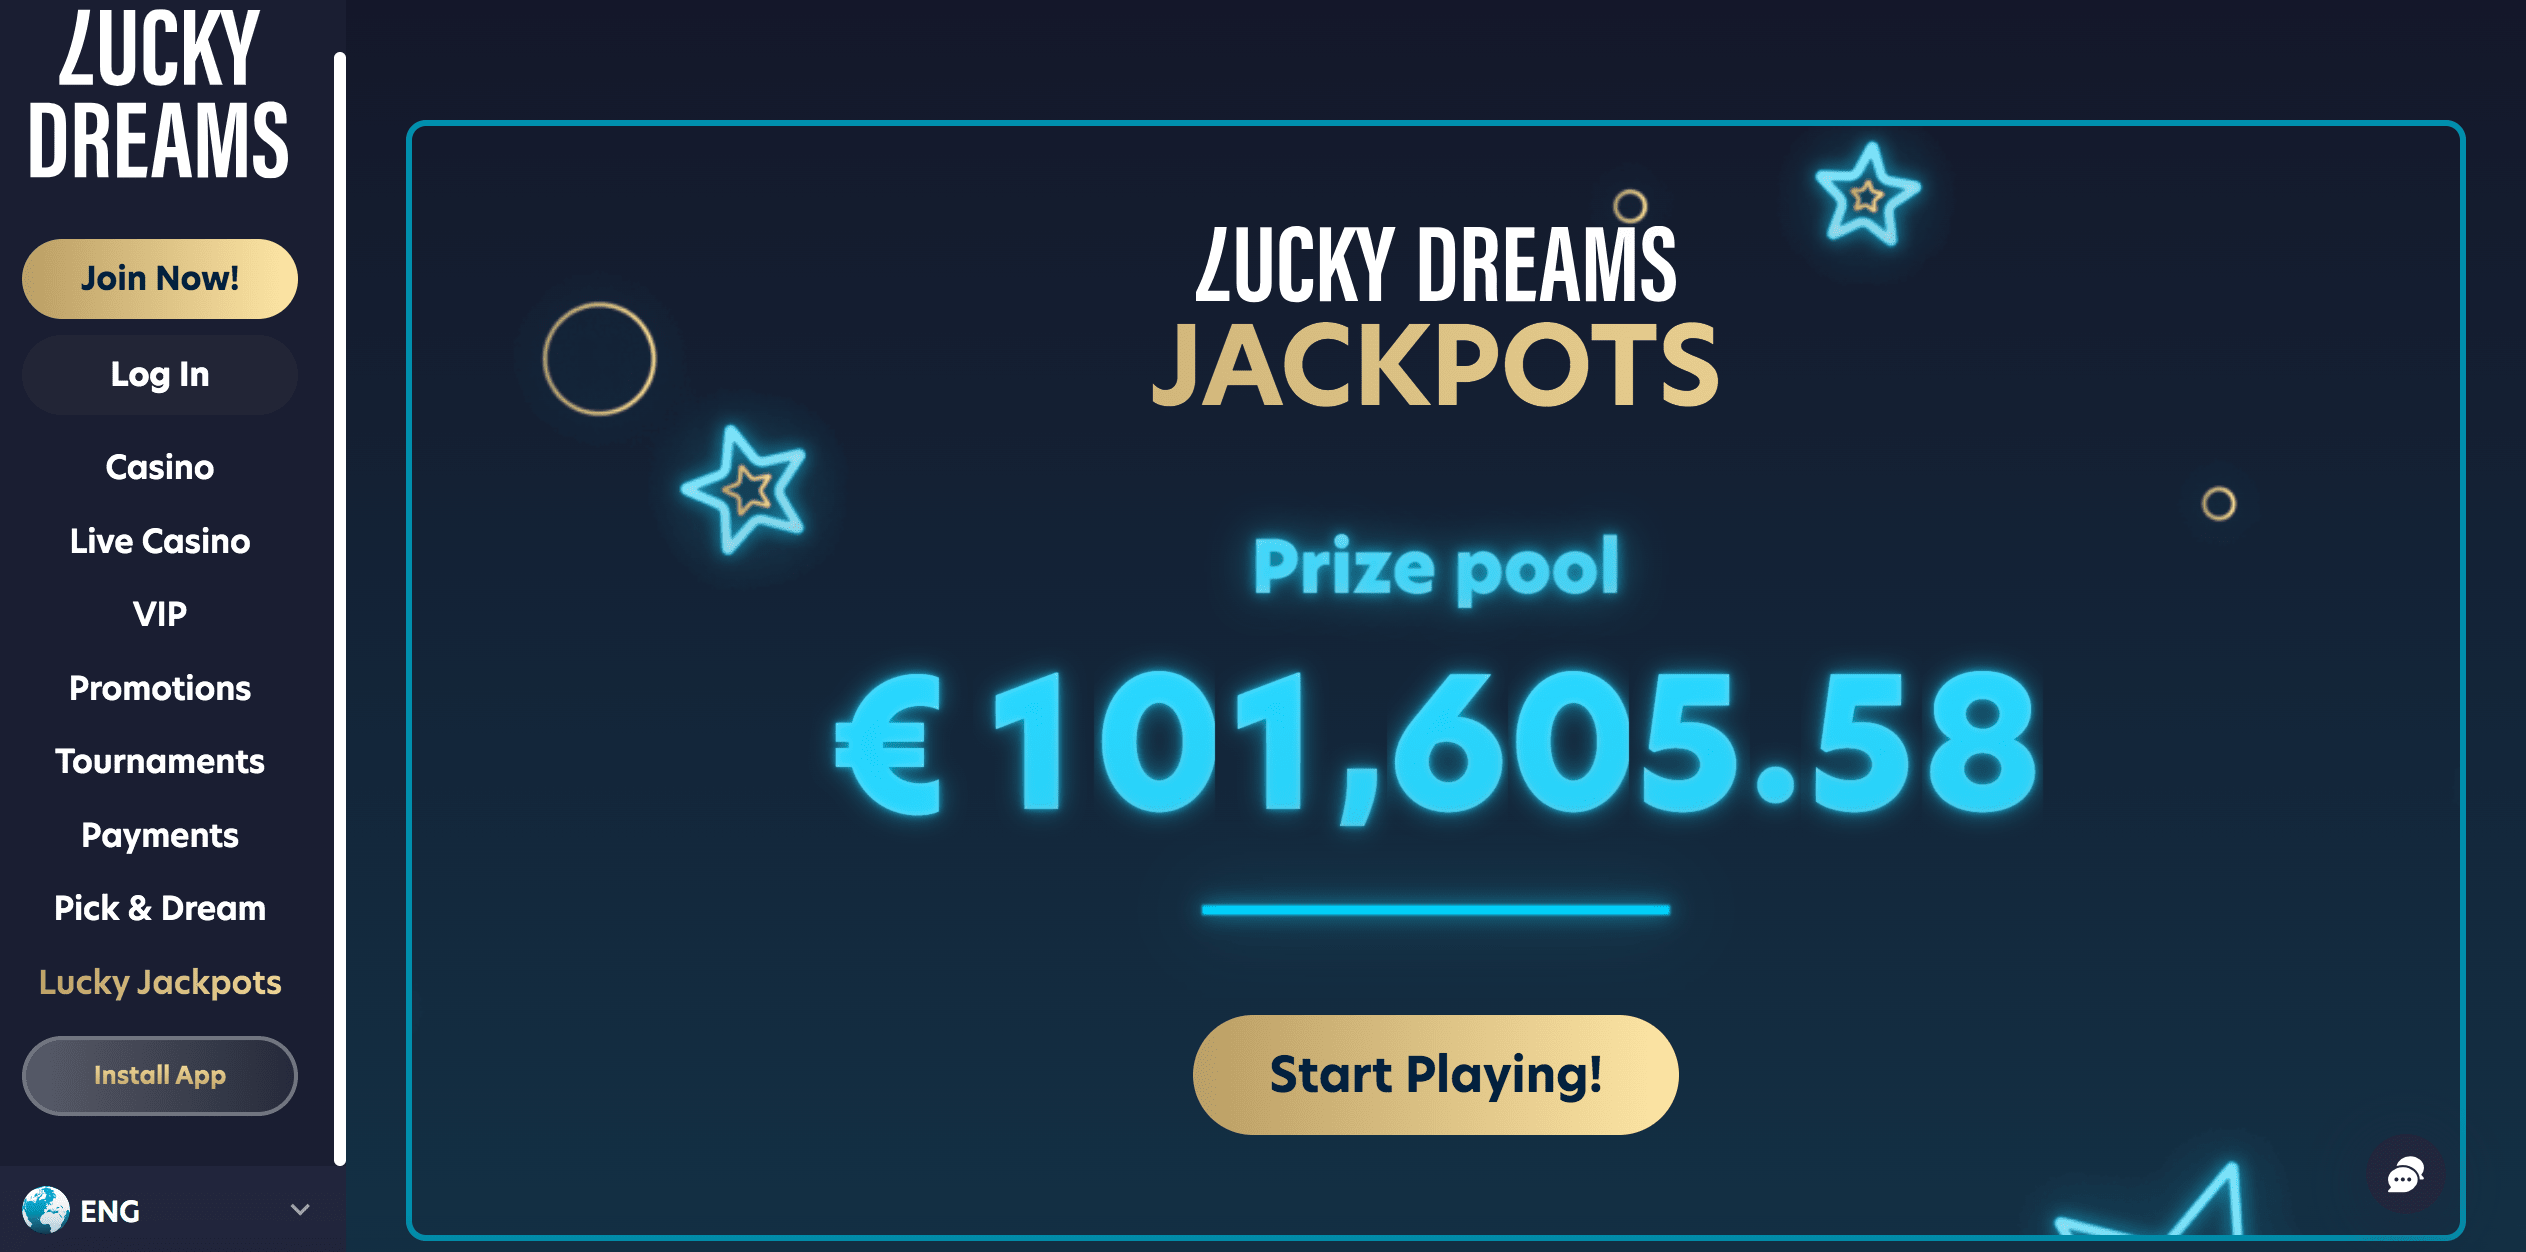 Lucky Dreams casino jackpots